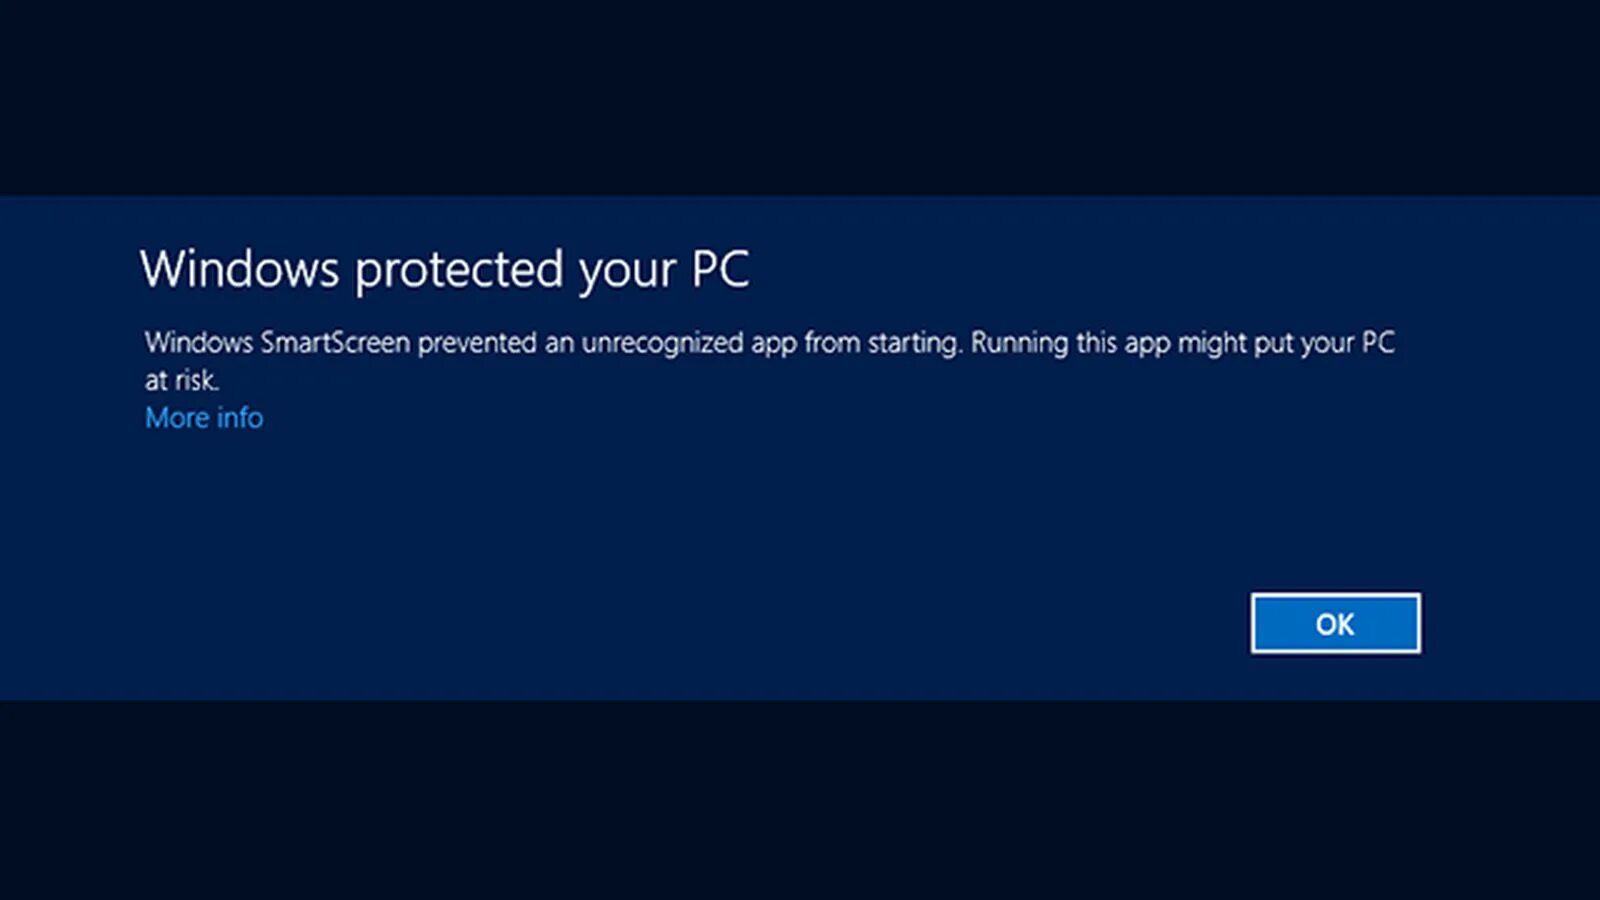 Windows smartscreen. Microsoft SMARTSCREEN. Windows protected. Windows protected your PC.